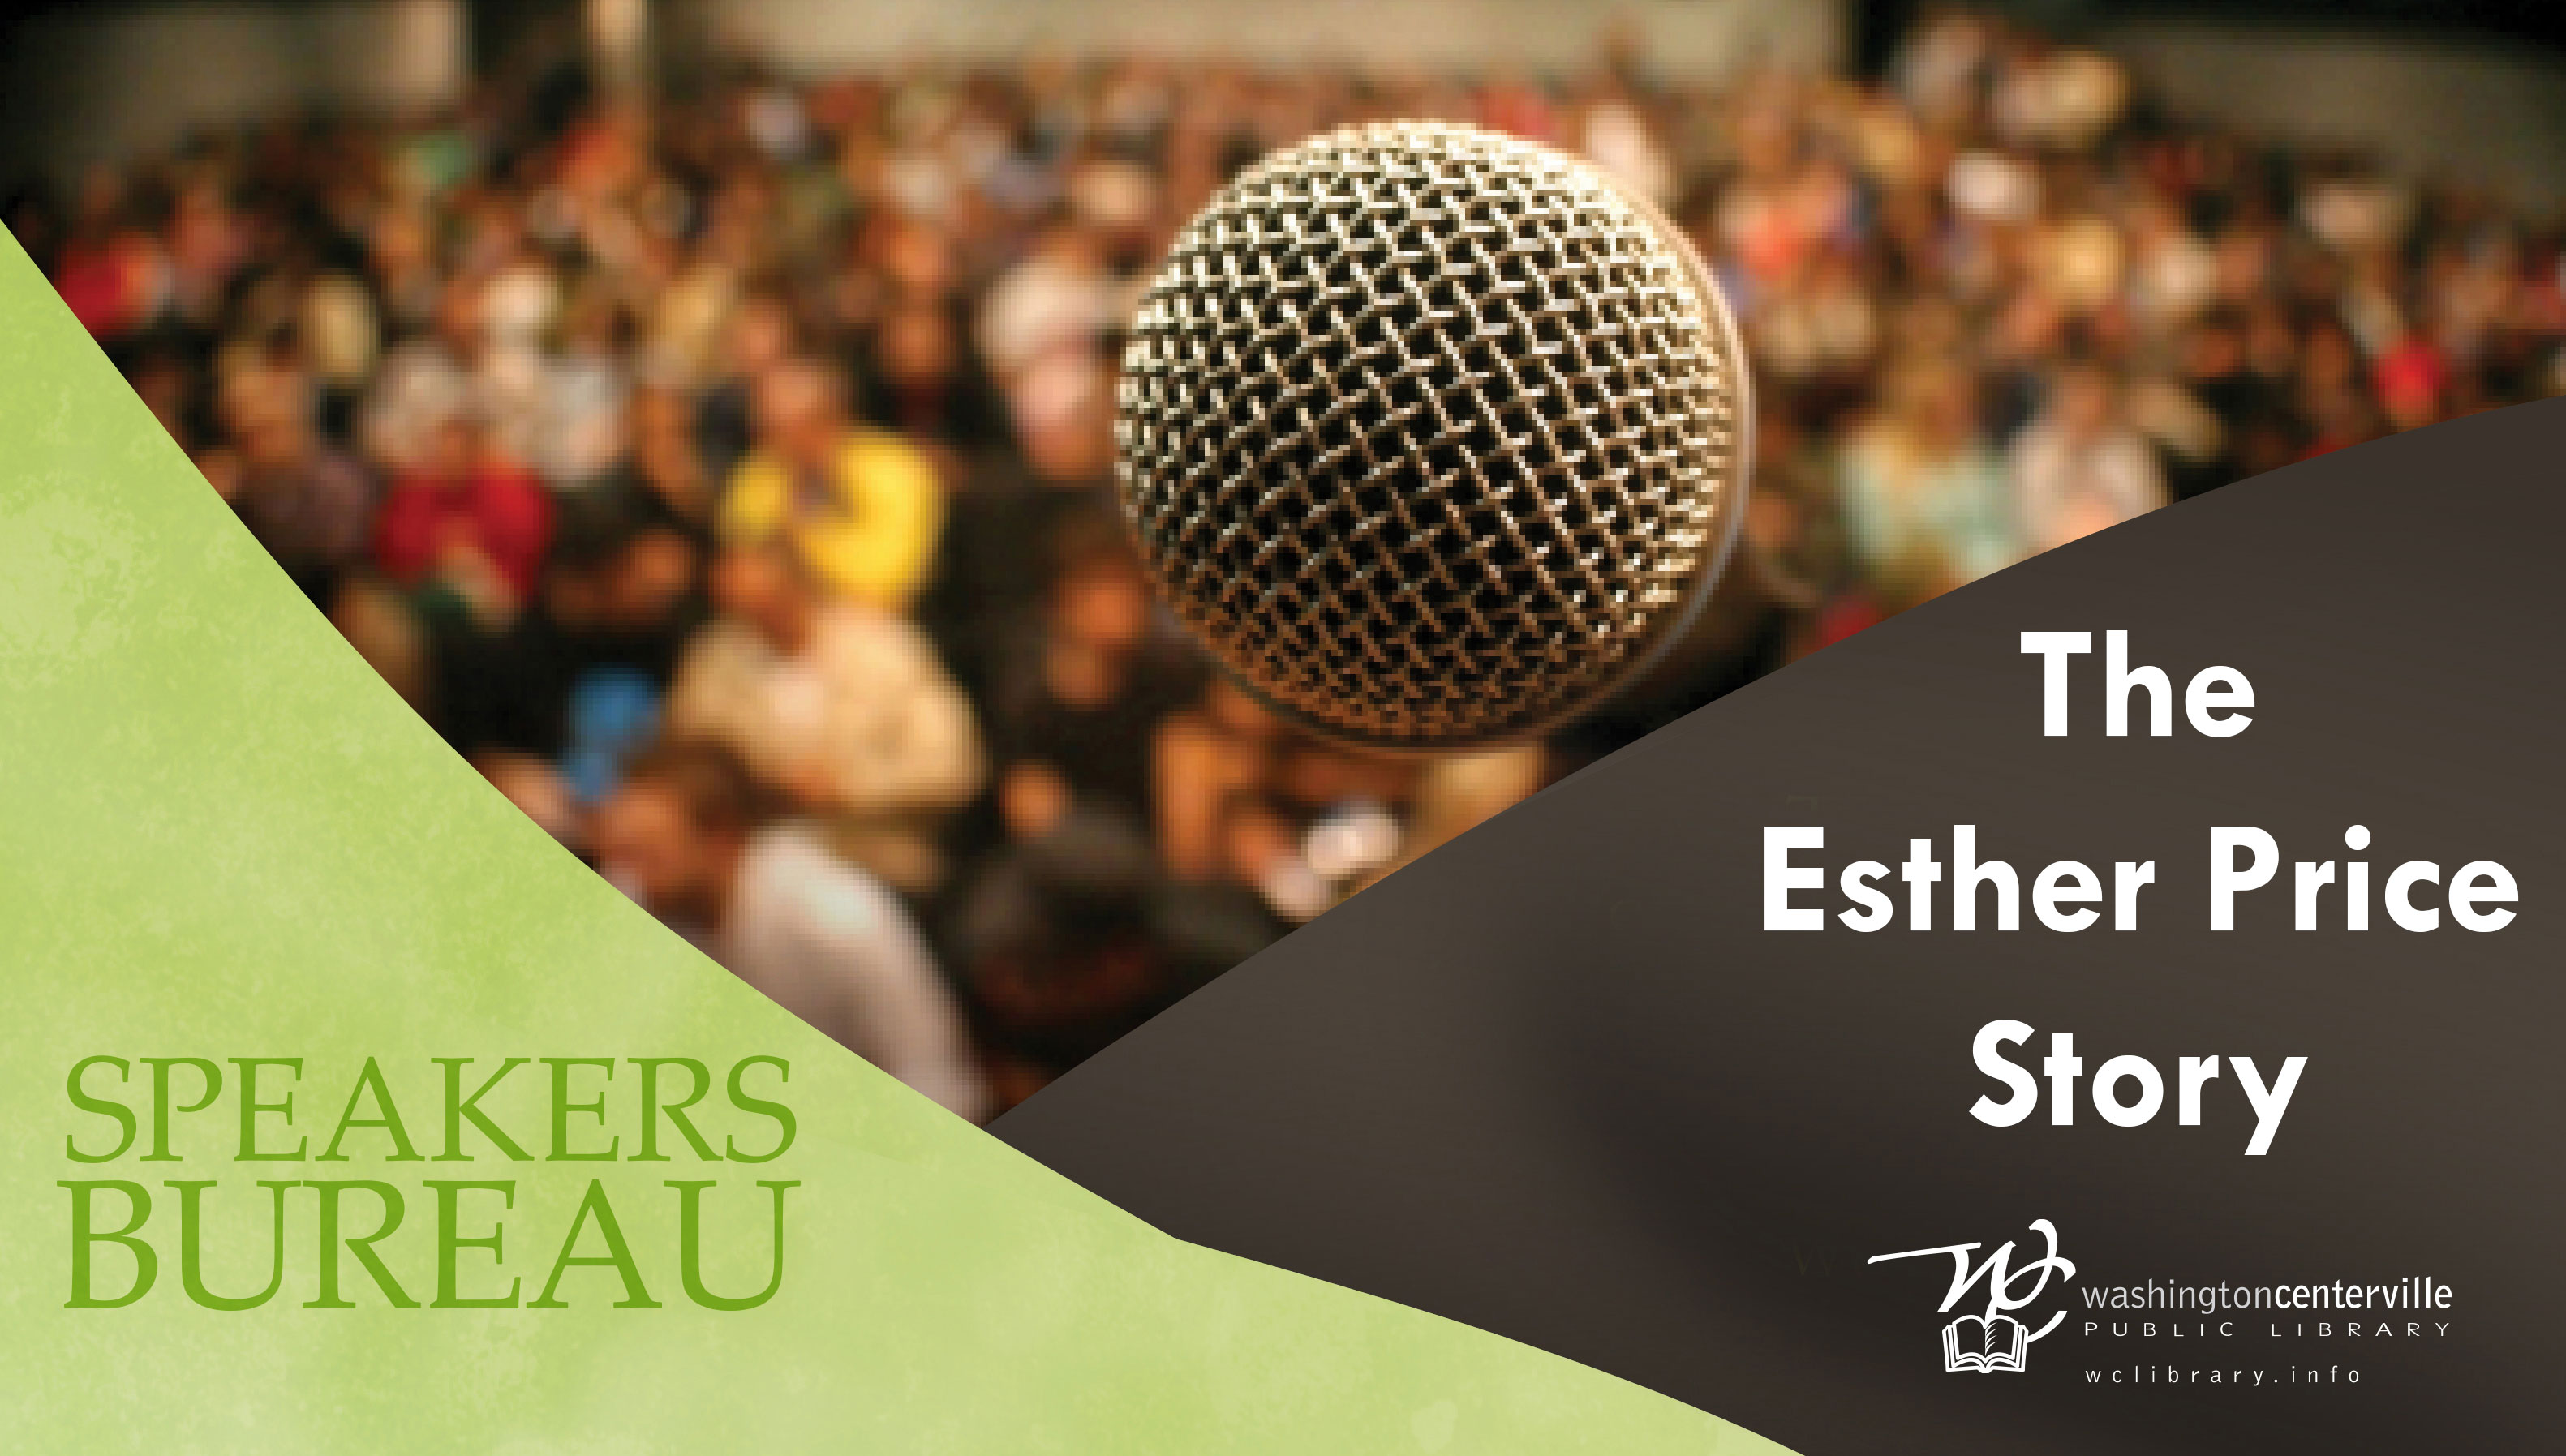 Speakers Bureau: The Esther Price Story